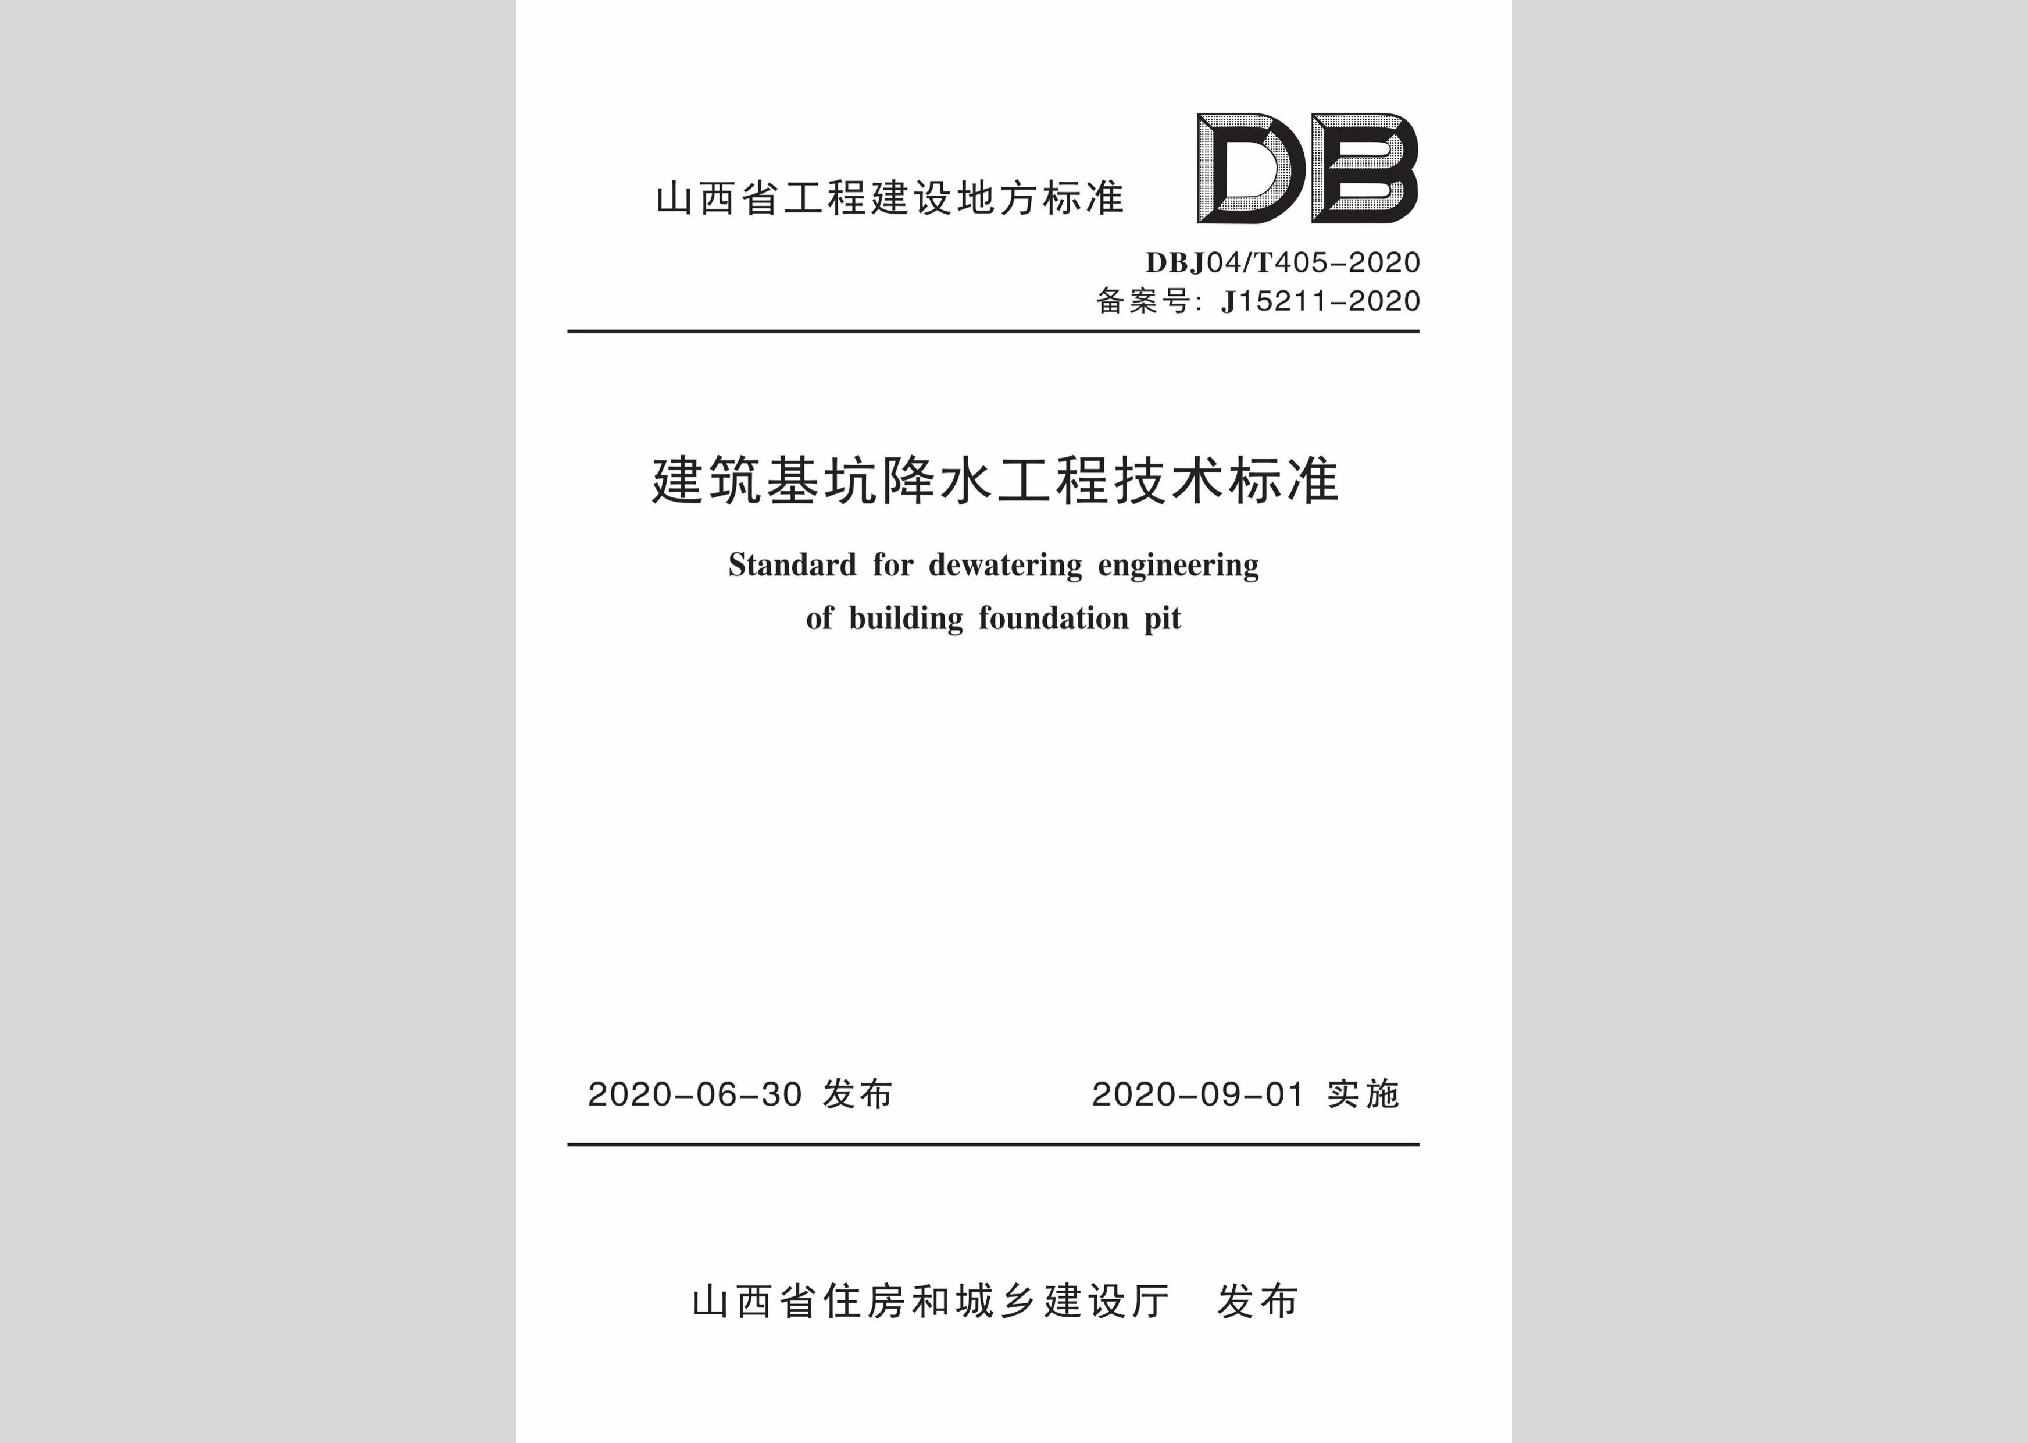 DBJ04/T405-2020：建筑基坑降水工程技术标准